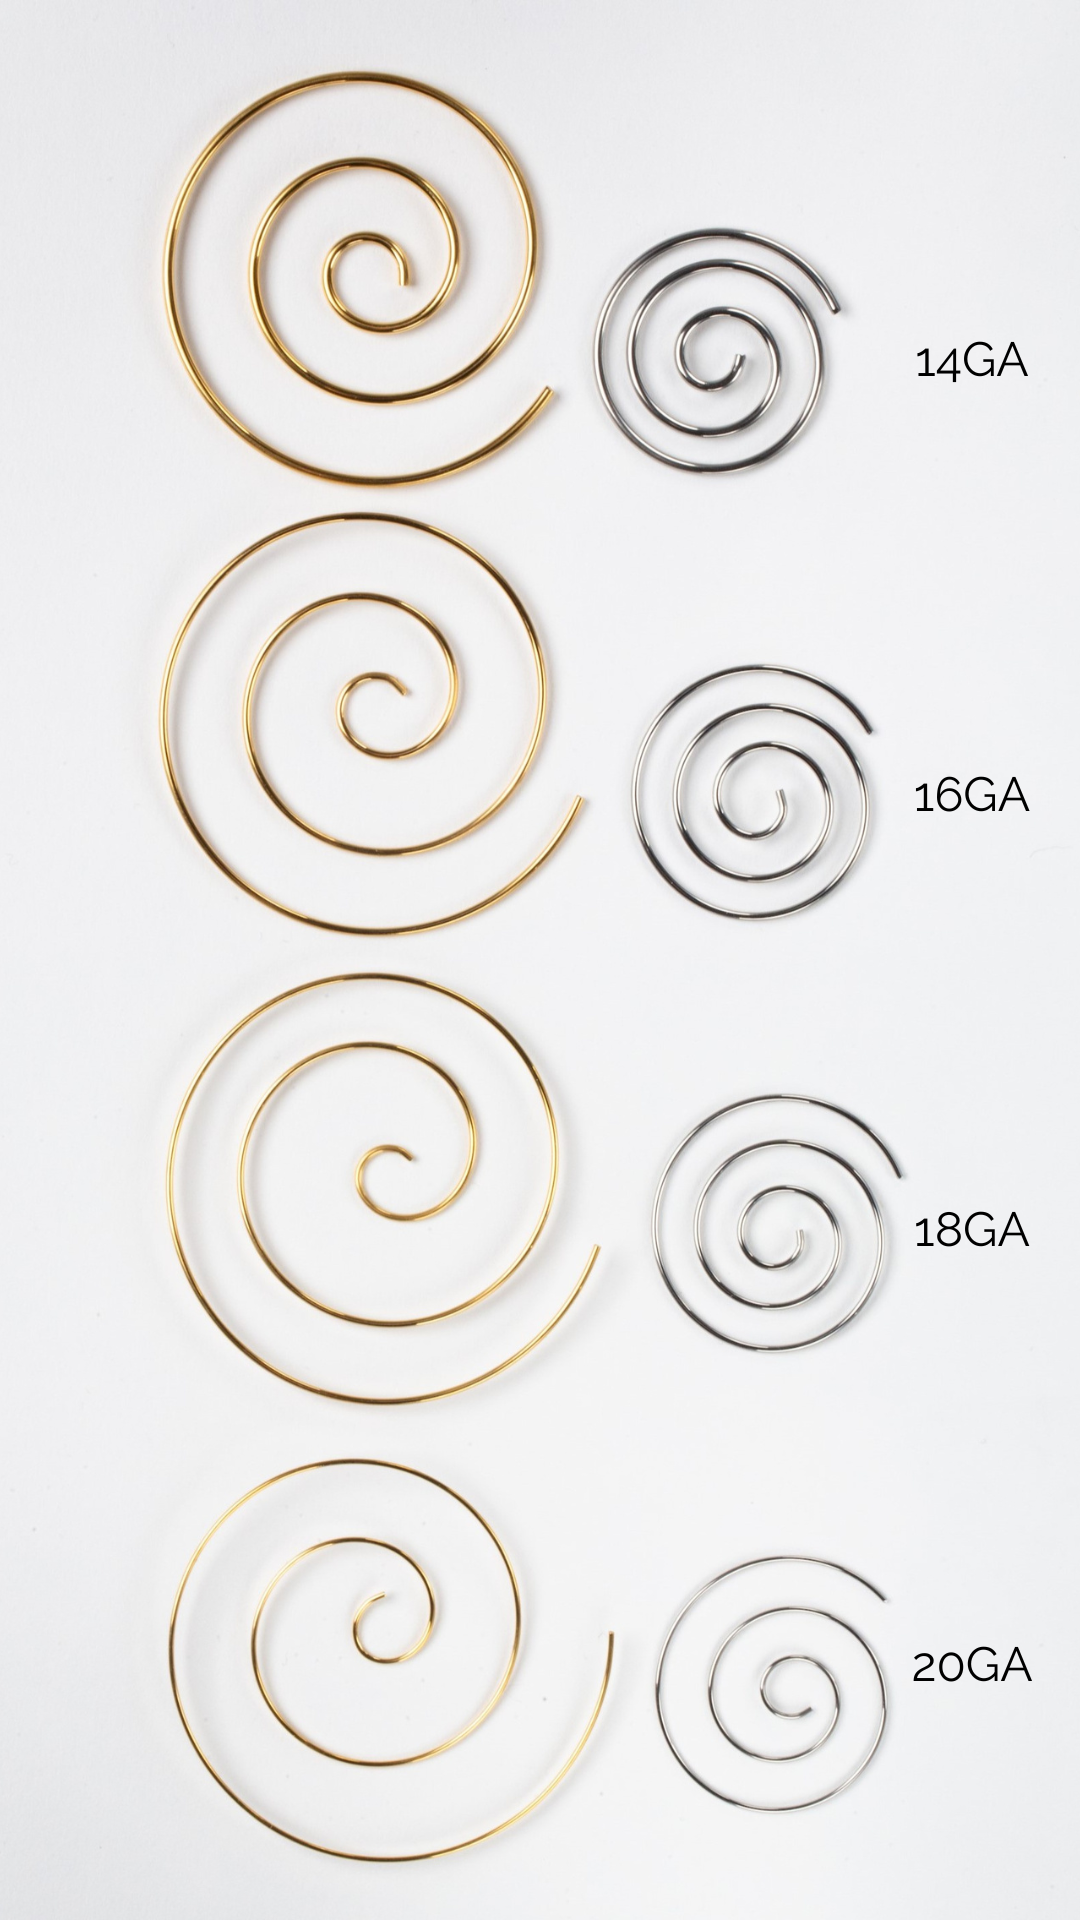 Small Spiral Coiled Hoop Earrings - Stainless Steel - Pair